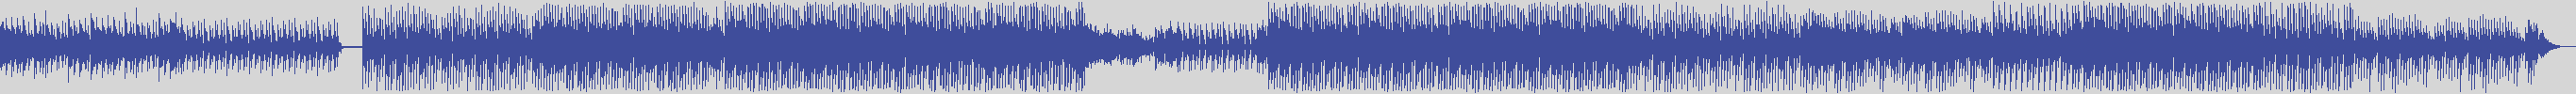 noclouds_chillout [NOC034] David Maj - Marea [Original Mix] audio wave form